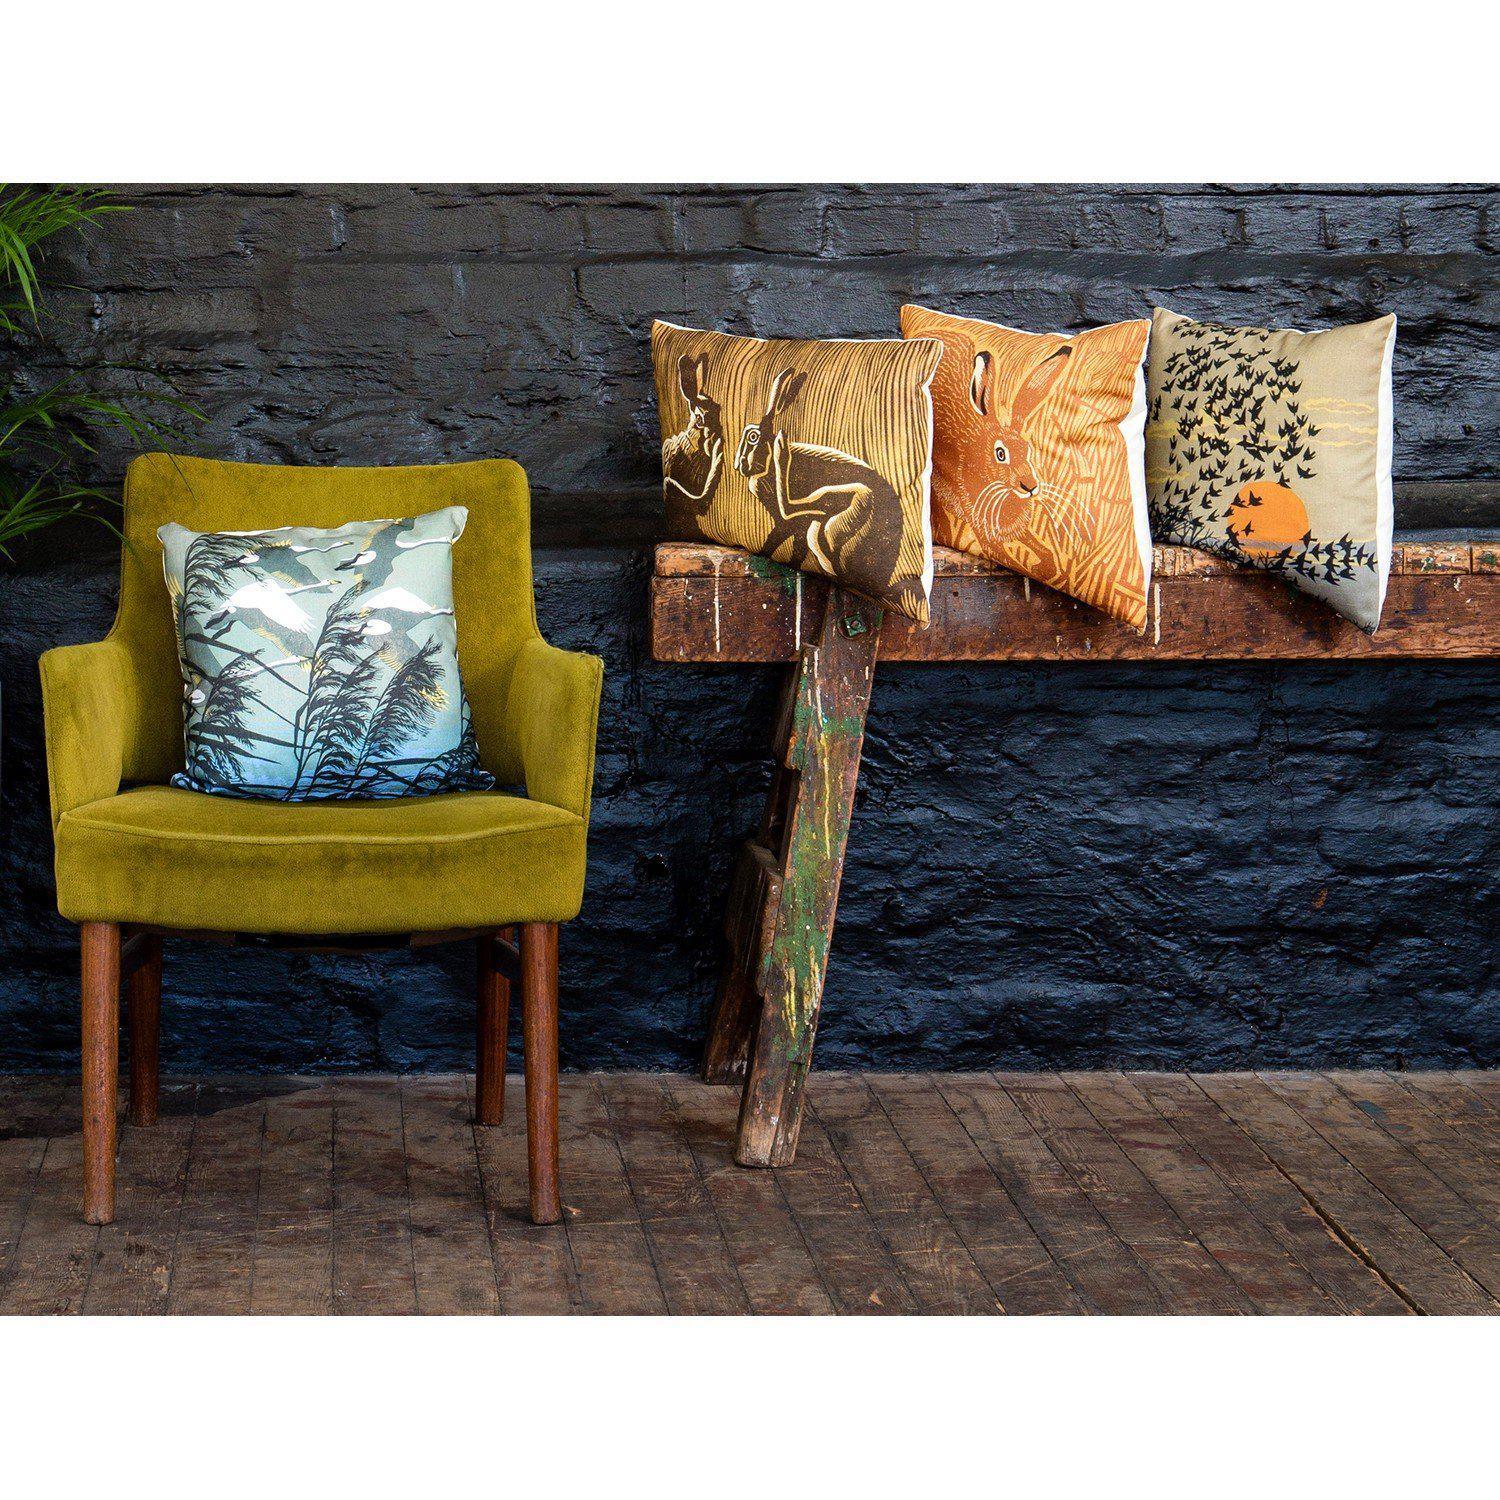 Golden Bird & Blossom Tree - Mary Evans Cushion - Handmade Cushions UK - WeLoveCushions